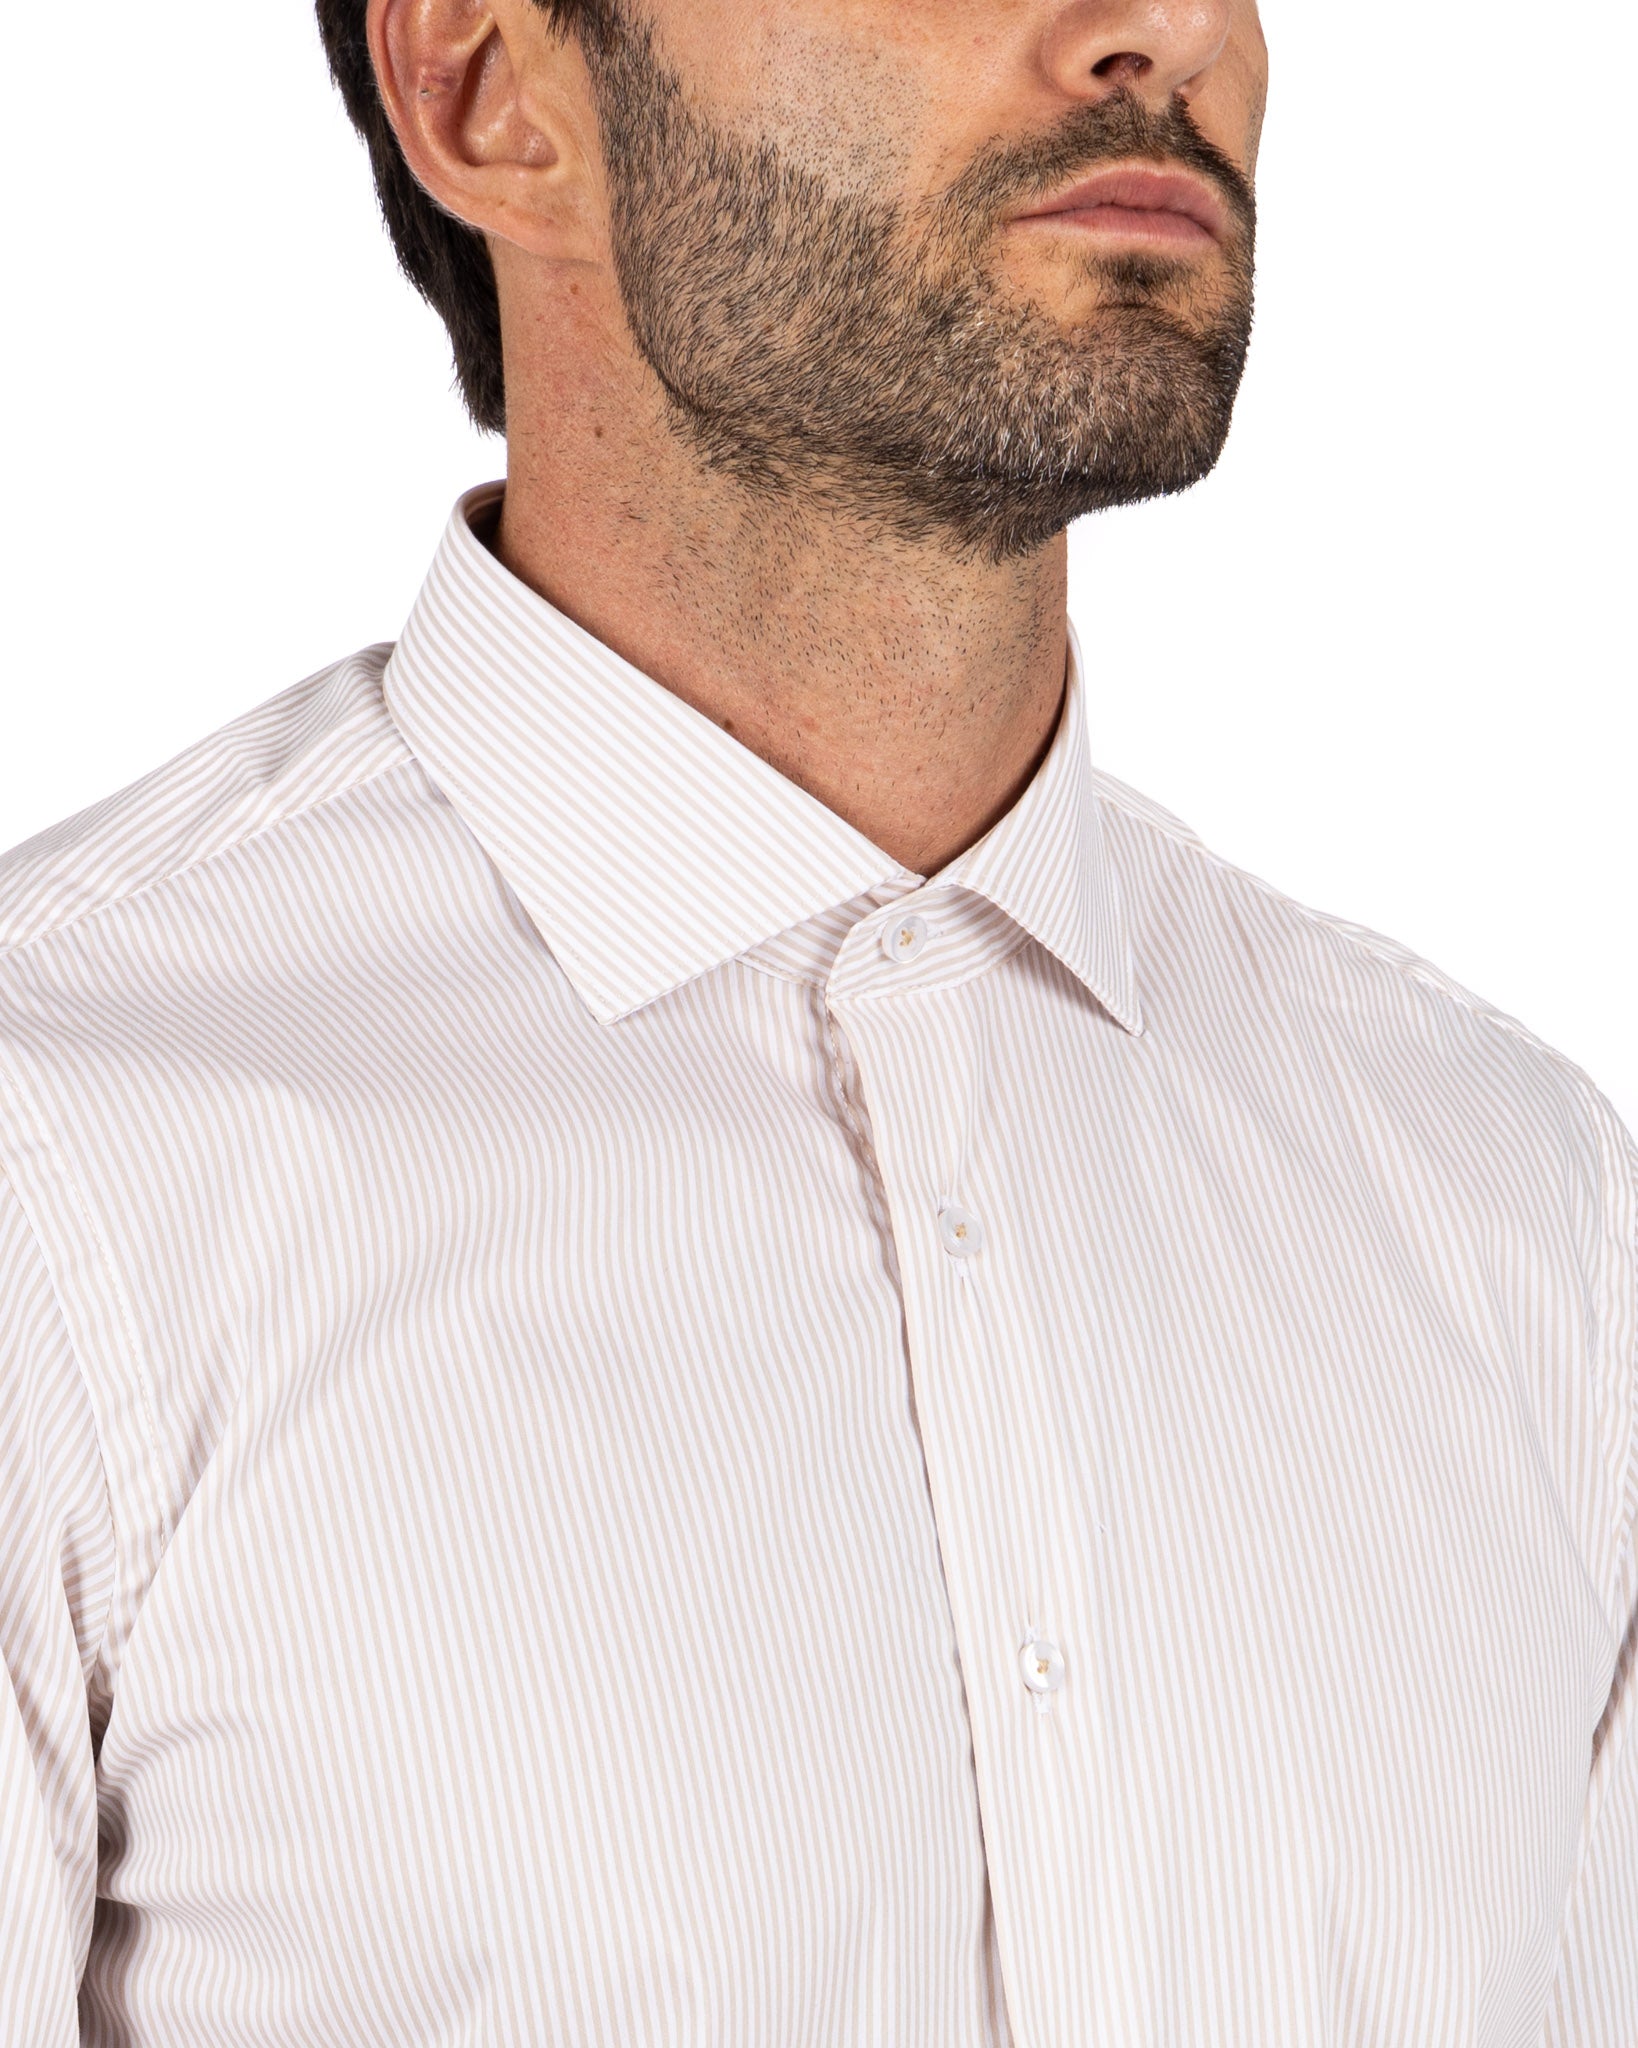 Camicia - basic classica riga stretta beige in cotone